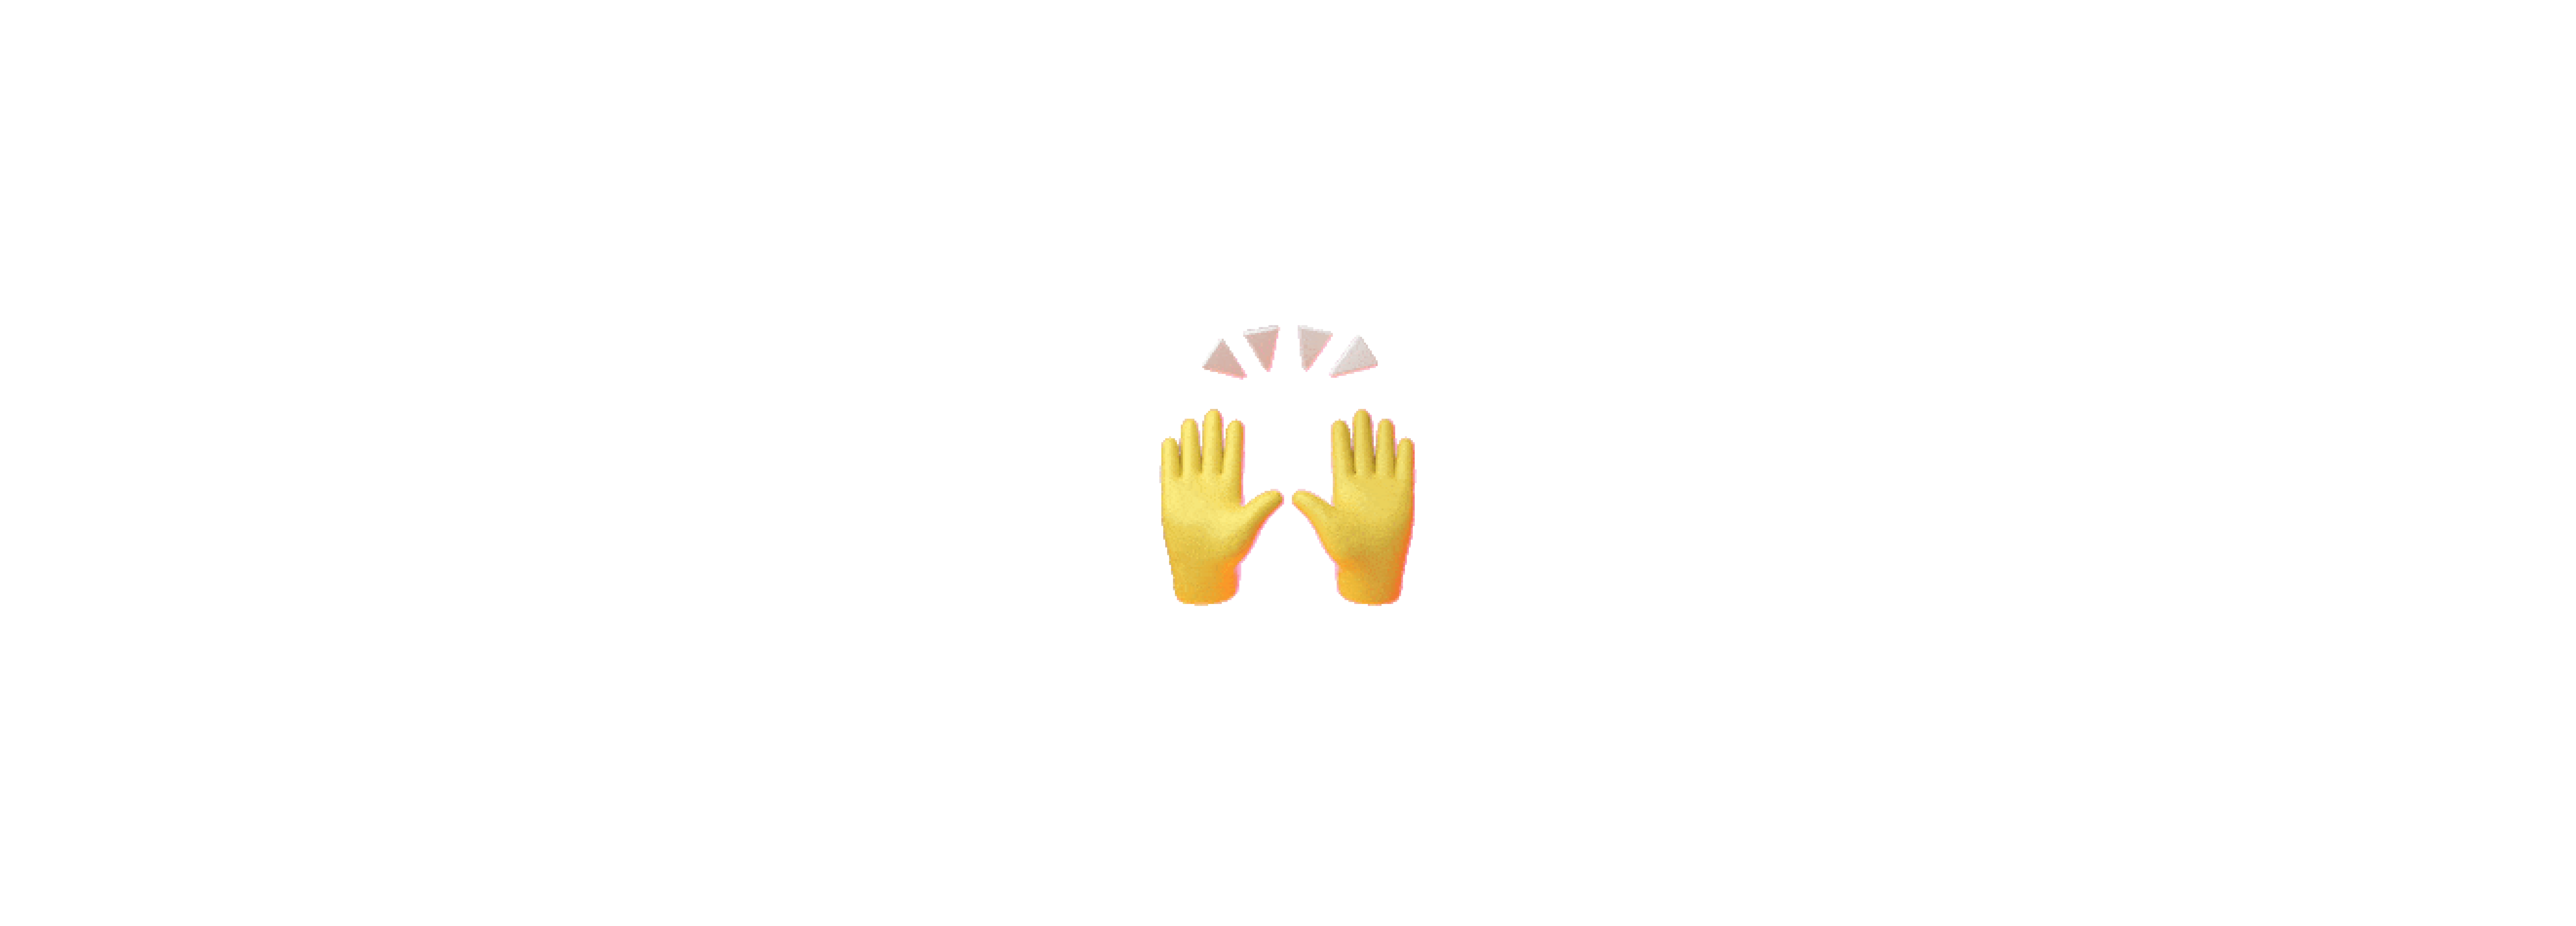 Emoji featuring hands up in celebration.